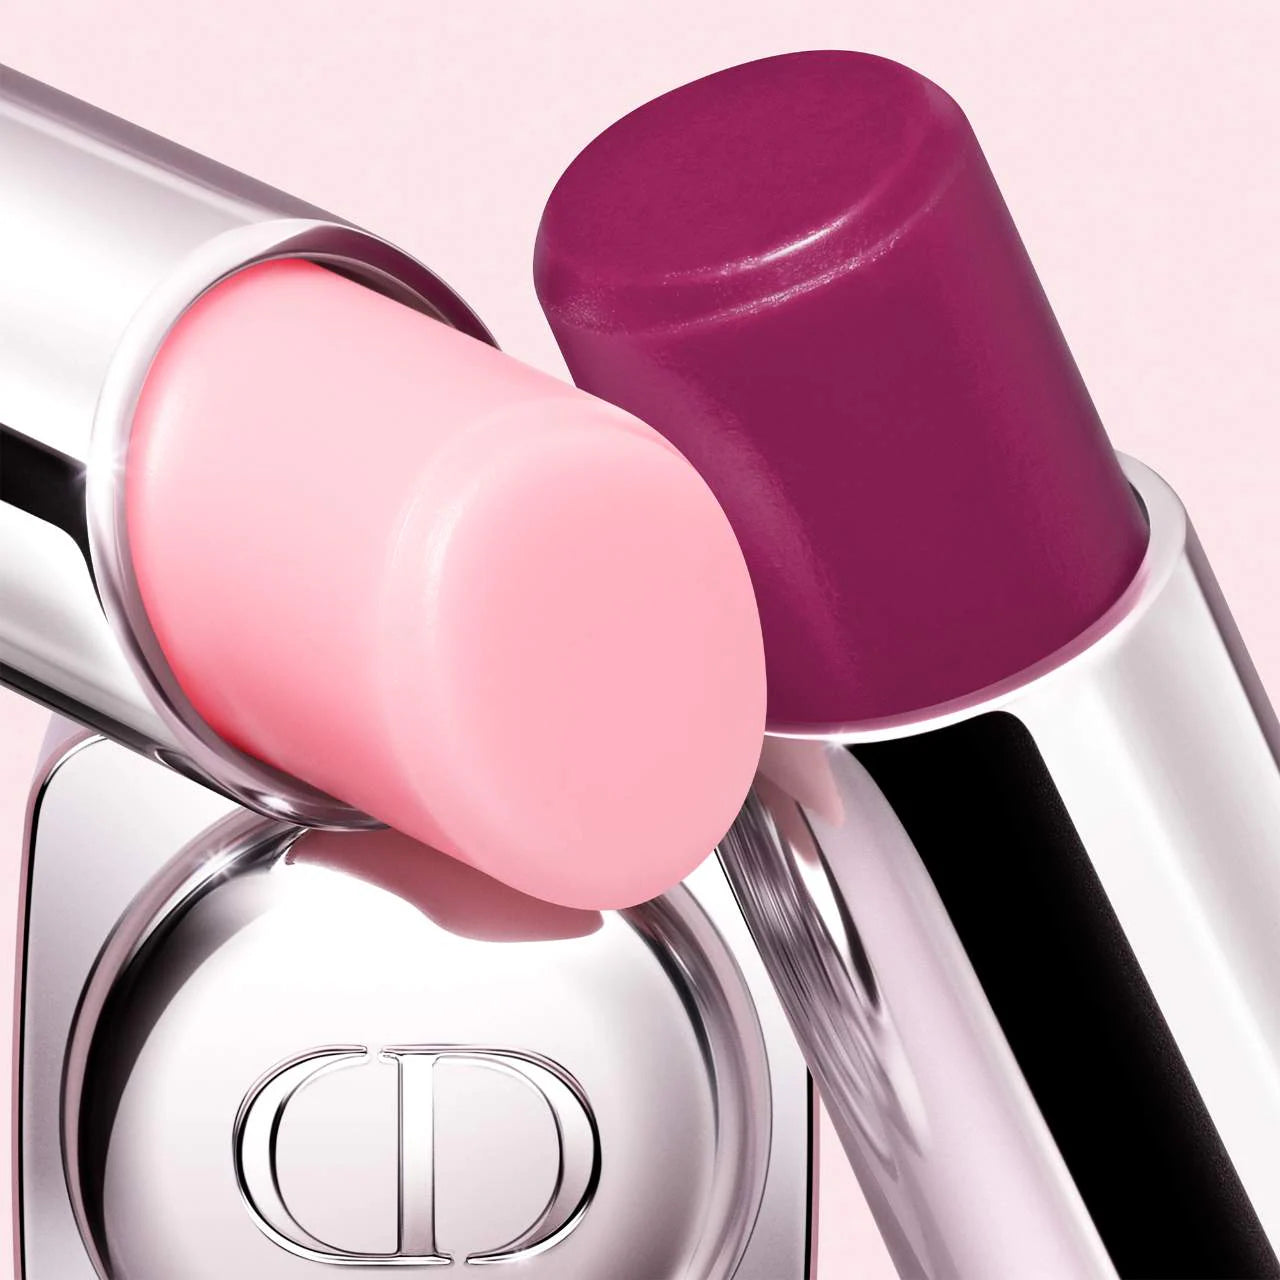 Dior Addict Lip Glow in Pink Lilac